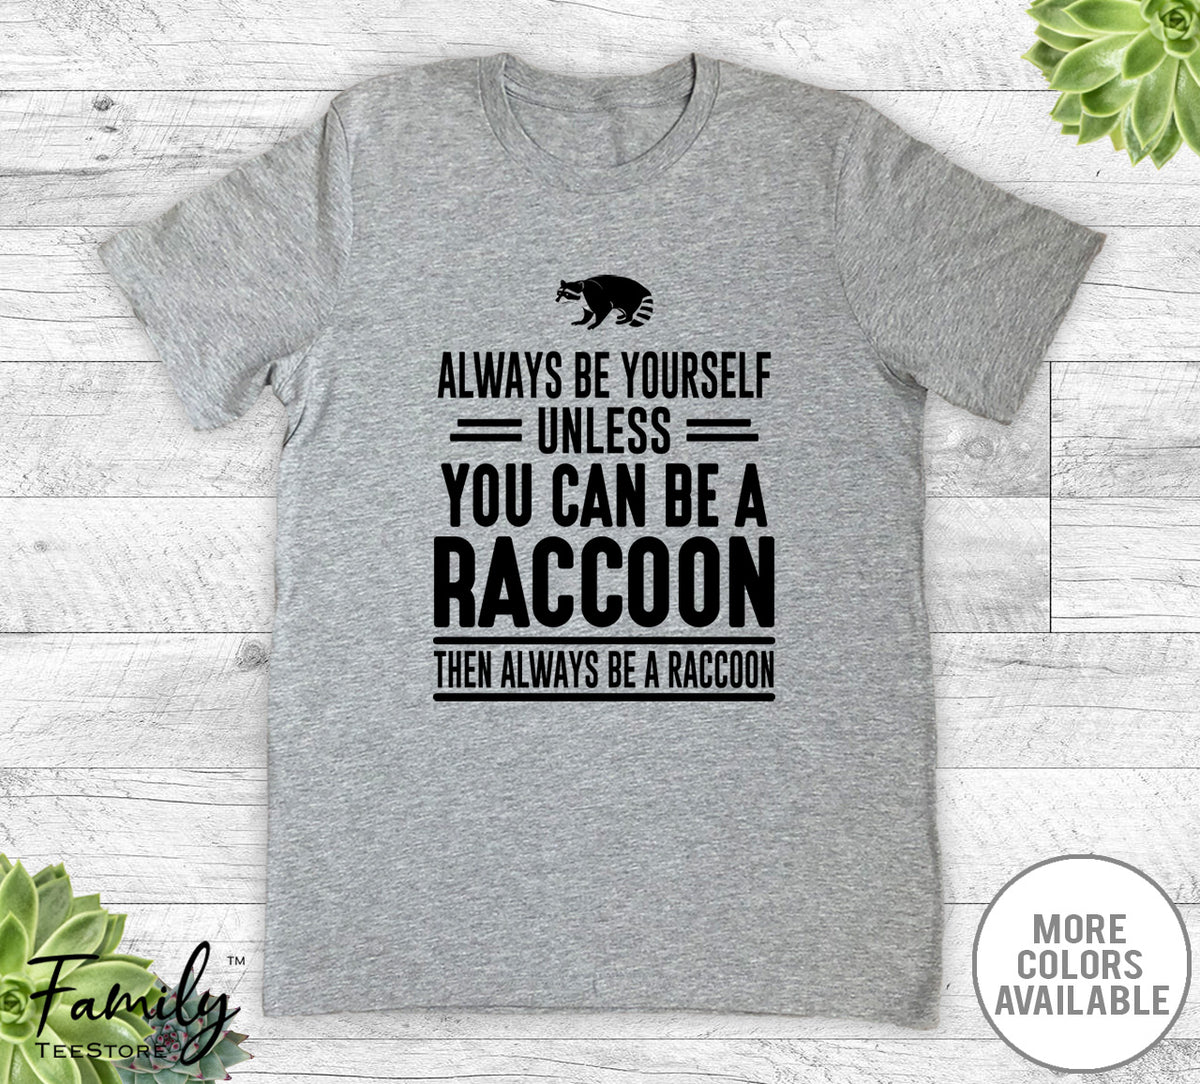 Always Be Yourself Unless You Can Be A Raccoon - Unisex T-shirt - Raccoon Shirt - Raccoon Gift - familyteeprints